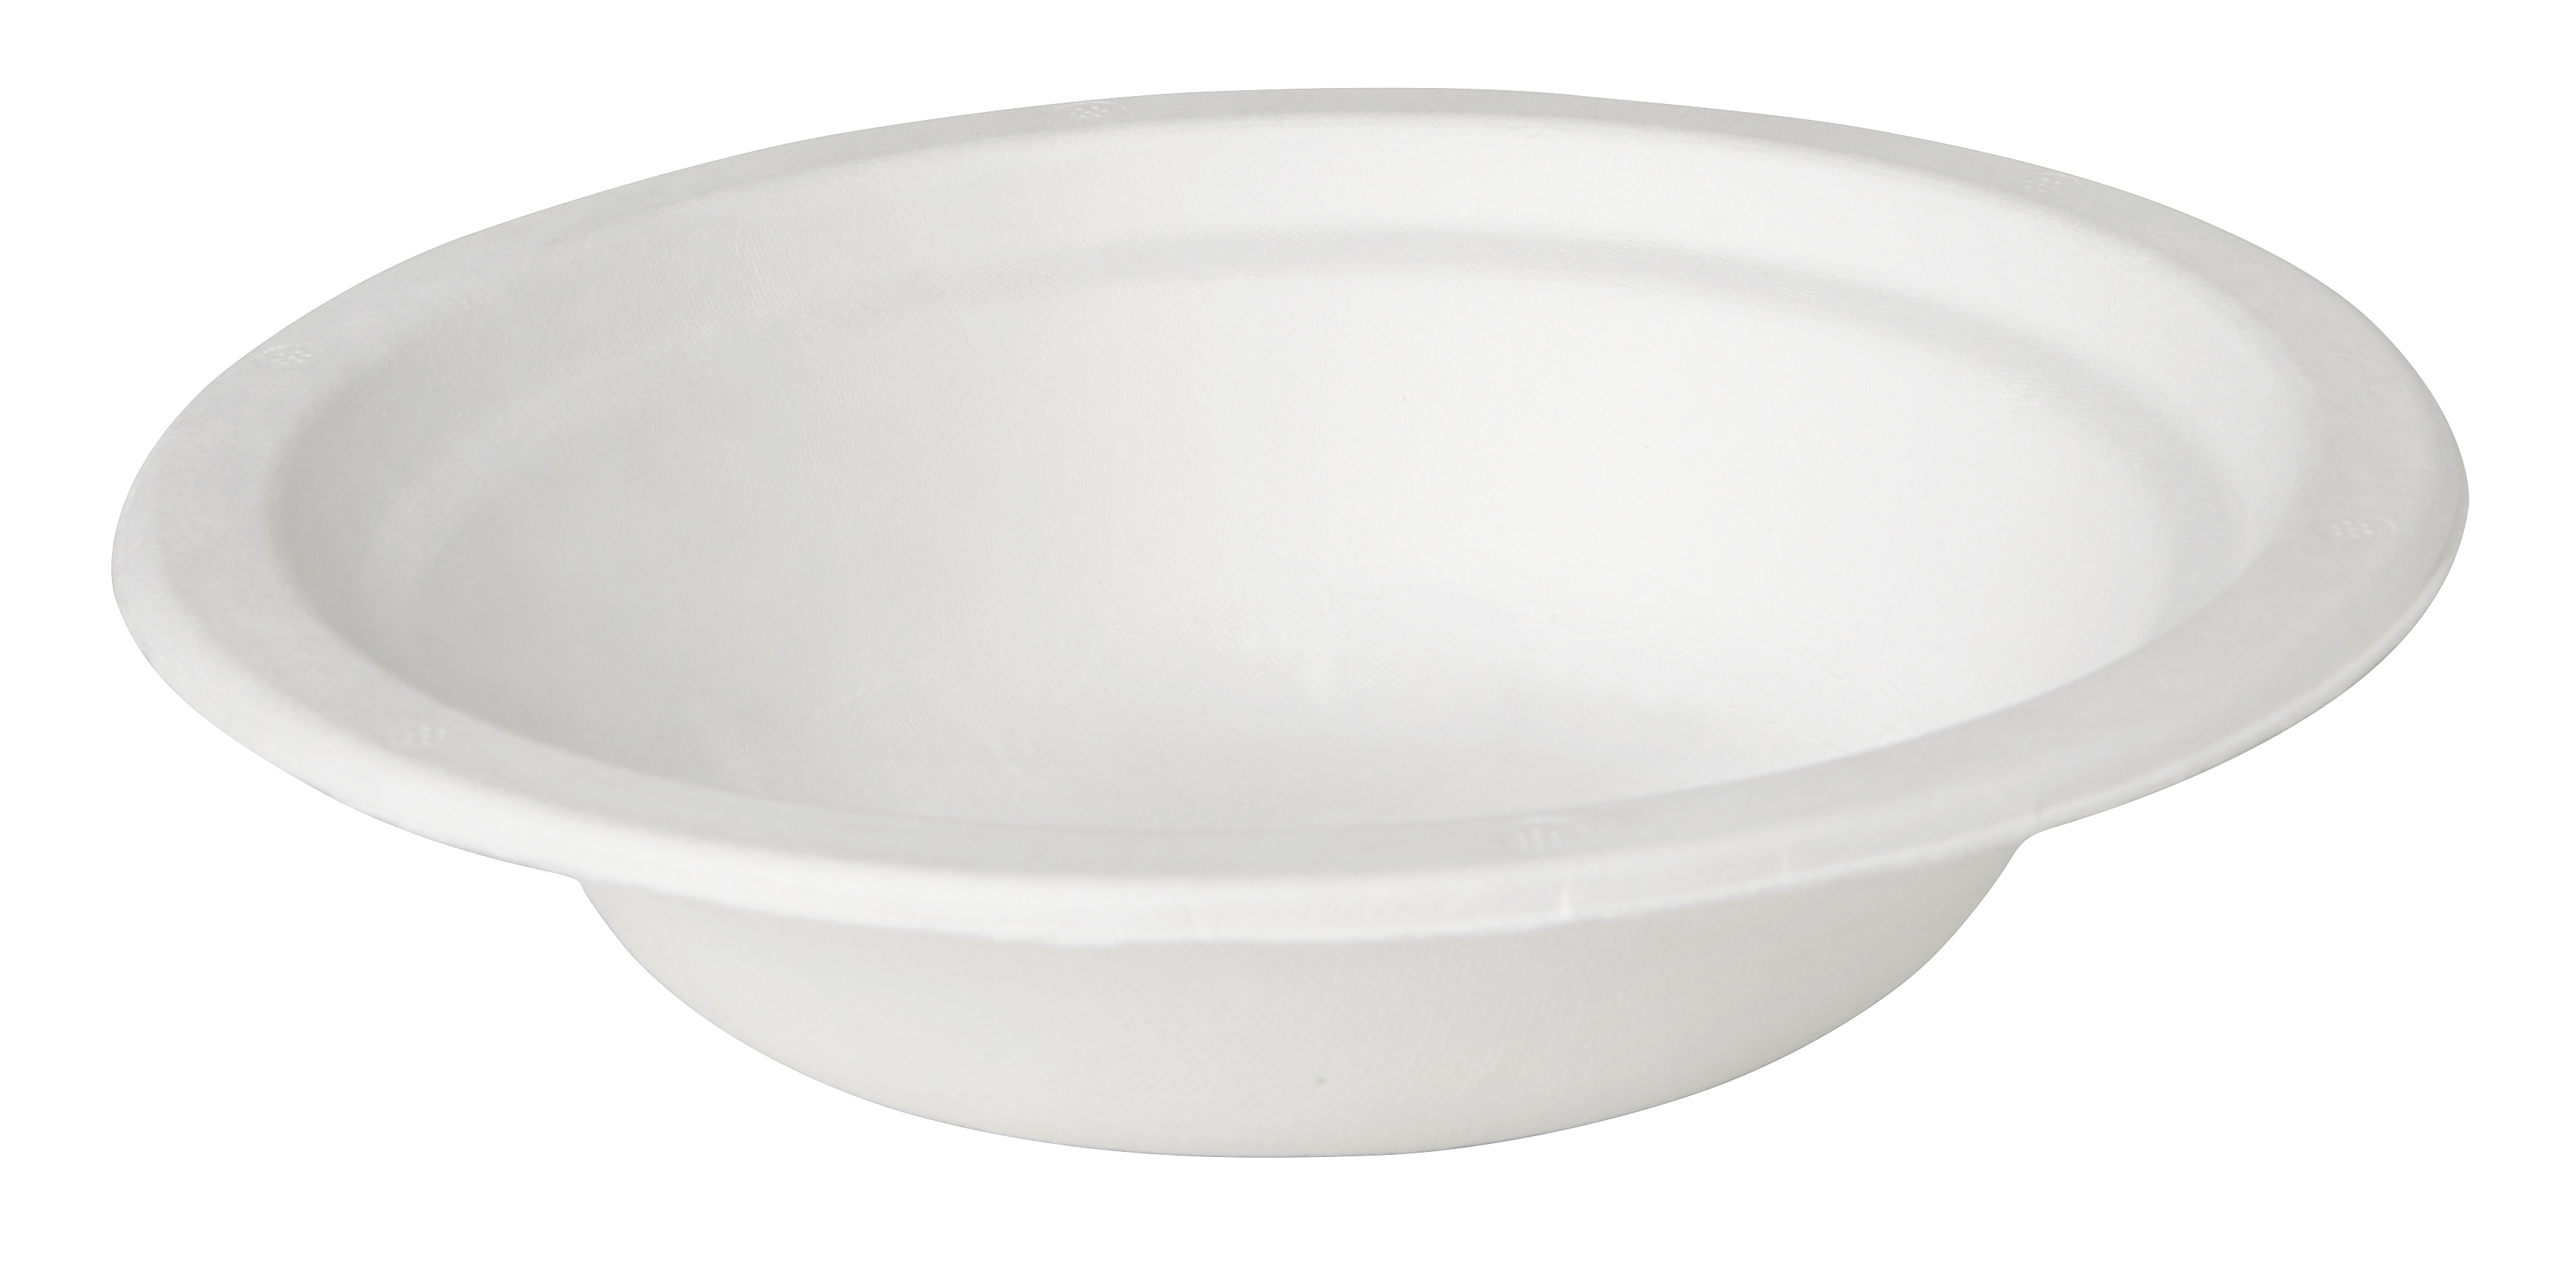 Био тарелка (сахарный тростник), глубокая 0,6л, 50/1000шт/кор. Тарелка столовая 23см сахарный тростник 50шт/рукав. Duni ecoecho 1/2 GN. Round bowl